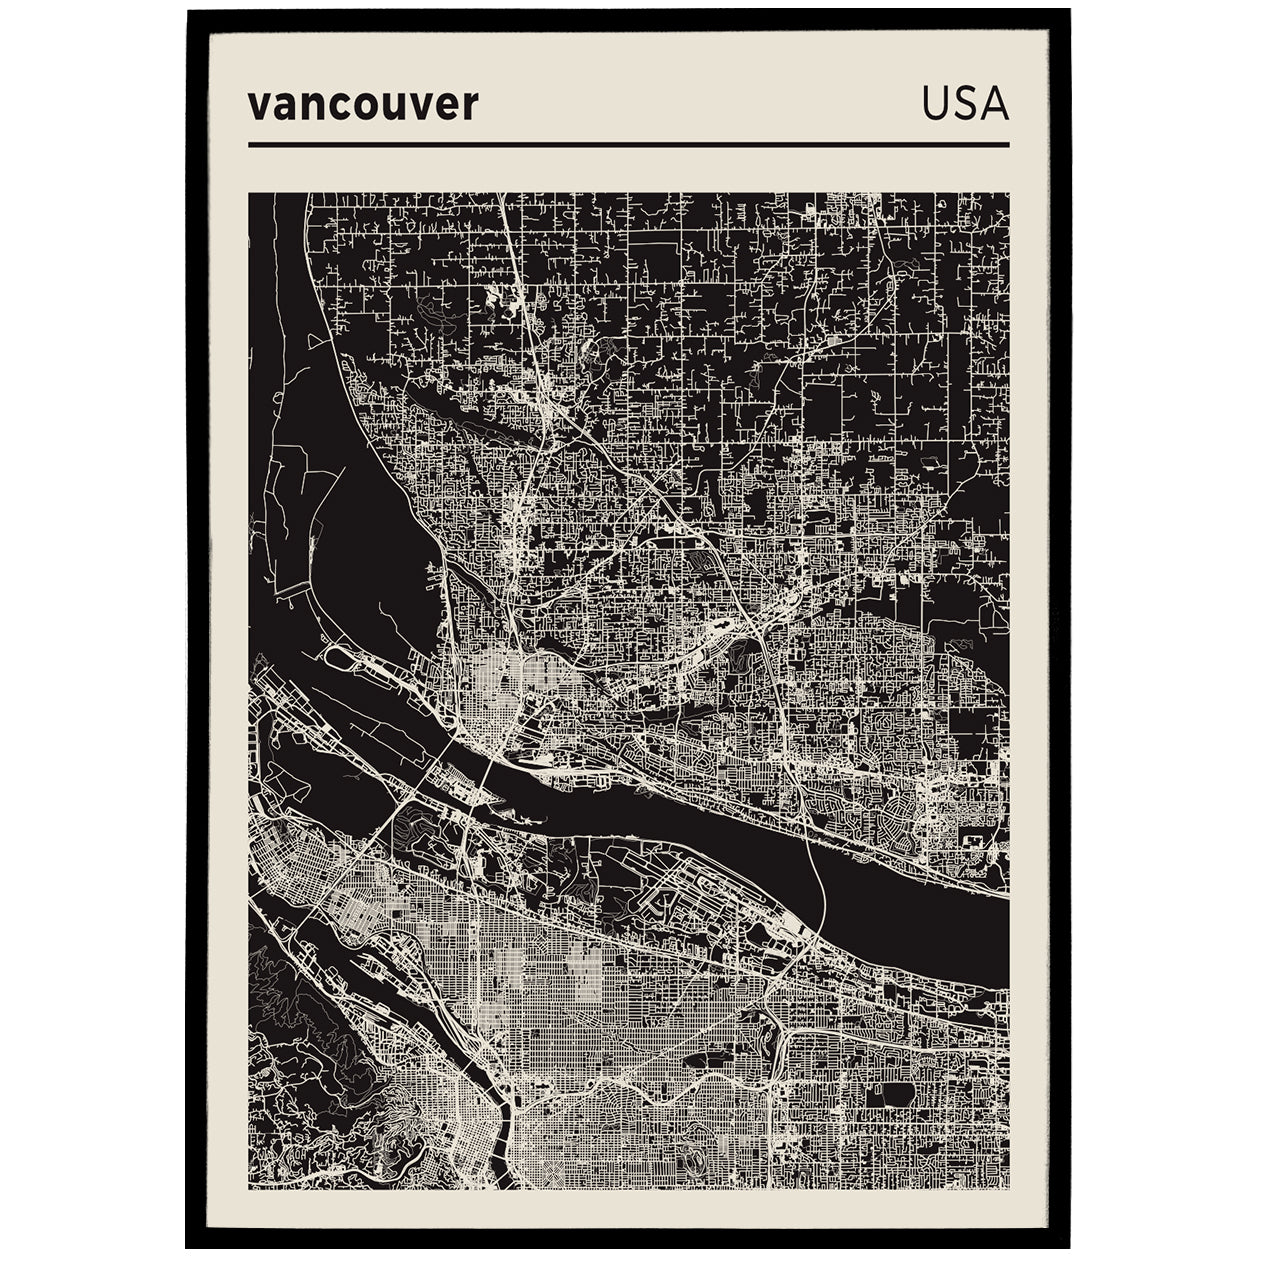 Vancouver - USA - City Map Poster